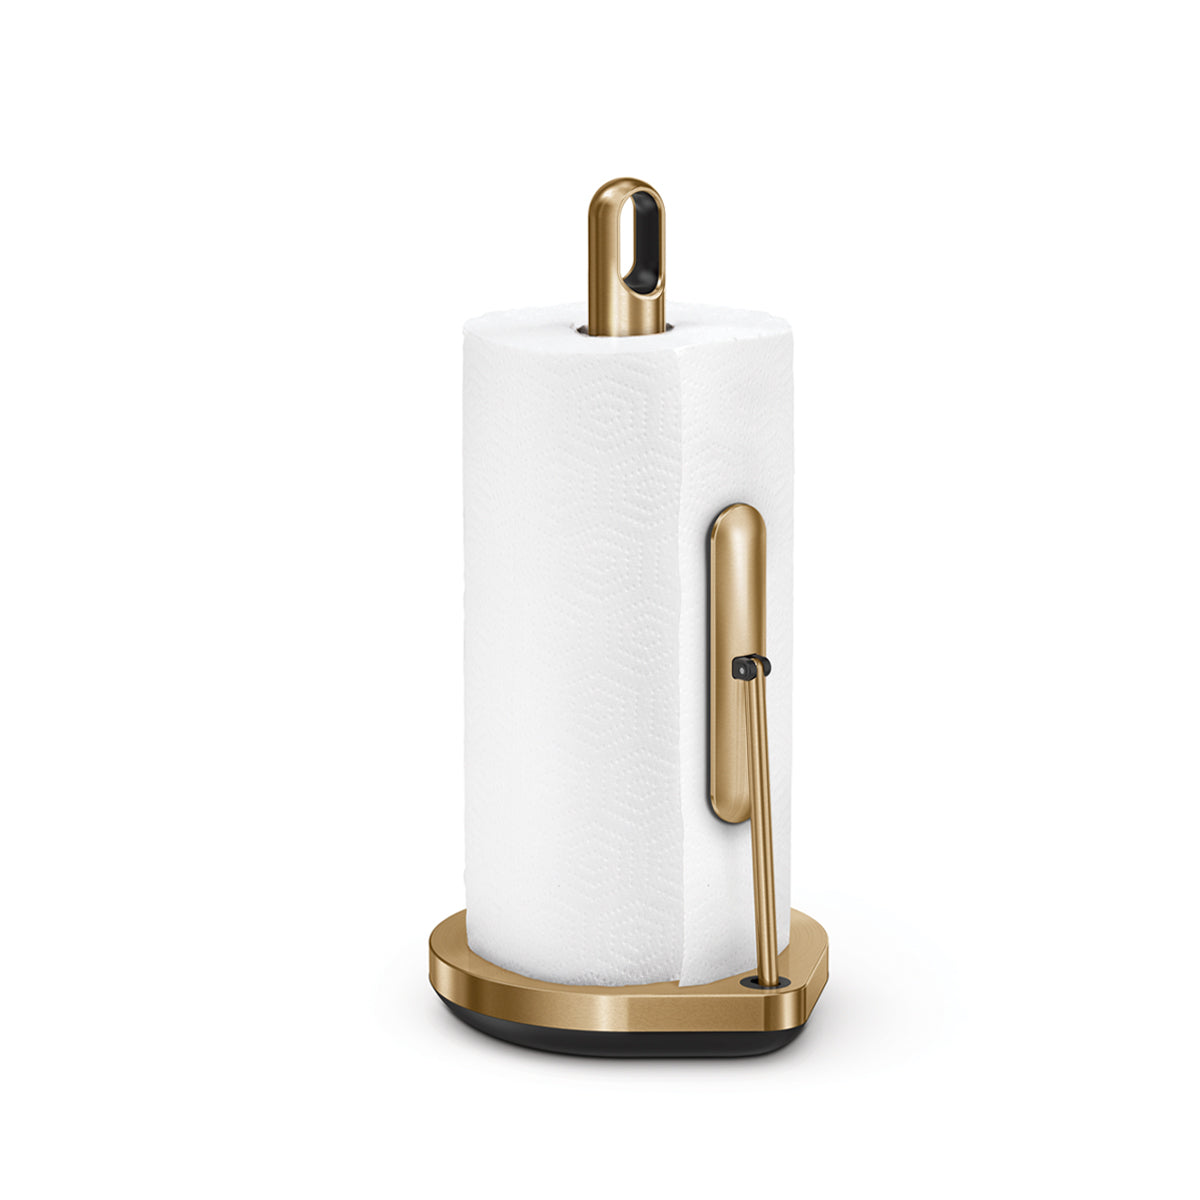 Standing Brass Paper Towel Holder